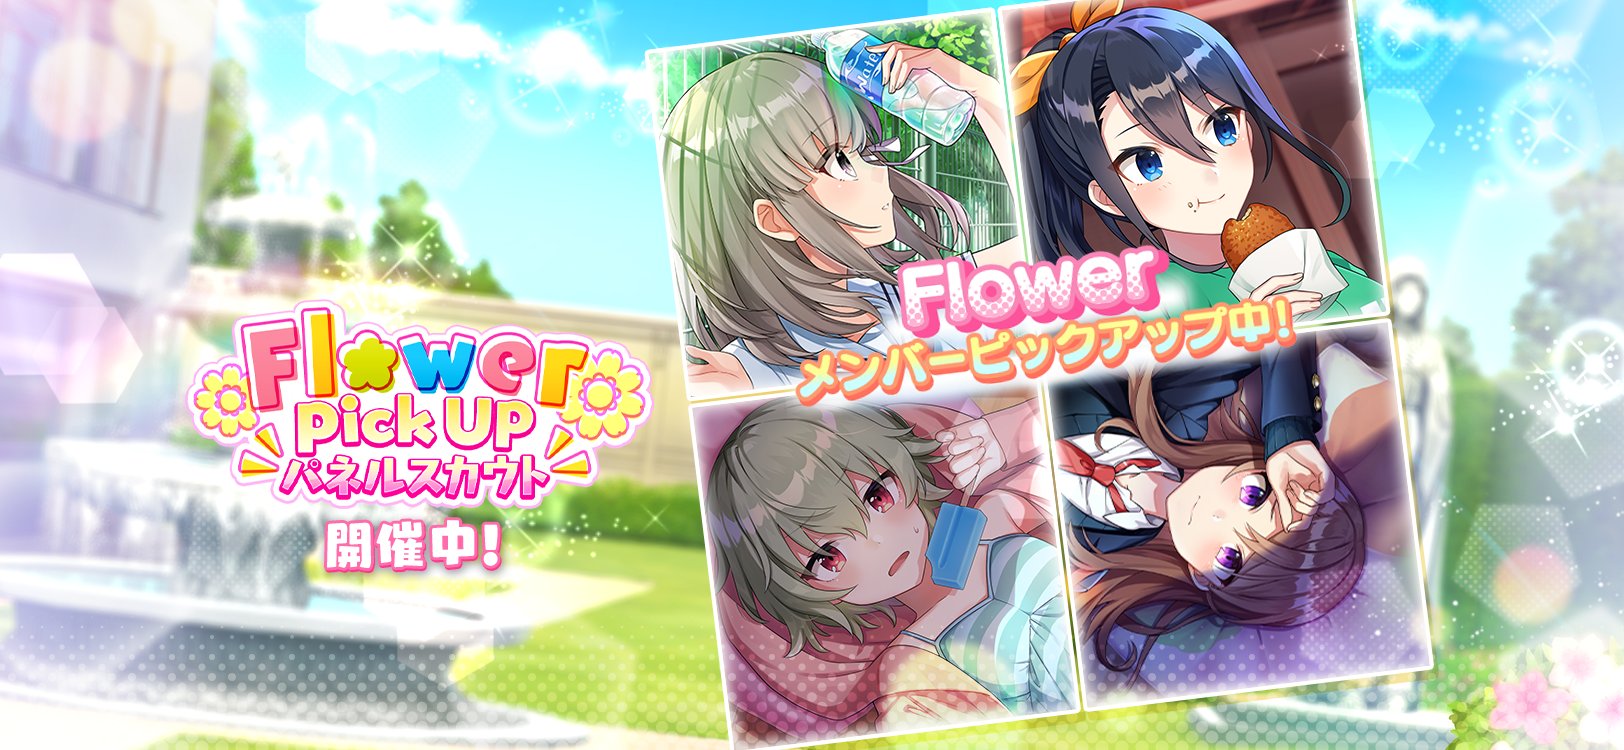 Flower PickUp 패널 스카우트 20200910.jpeg